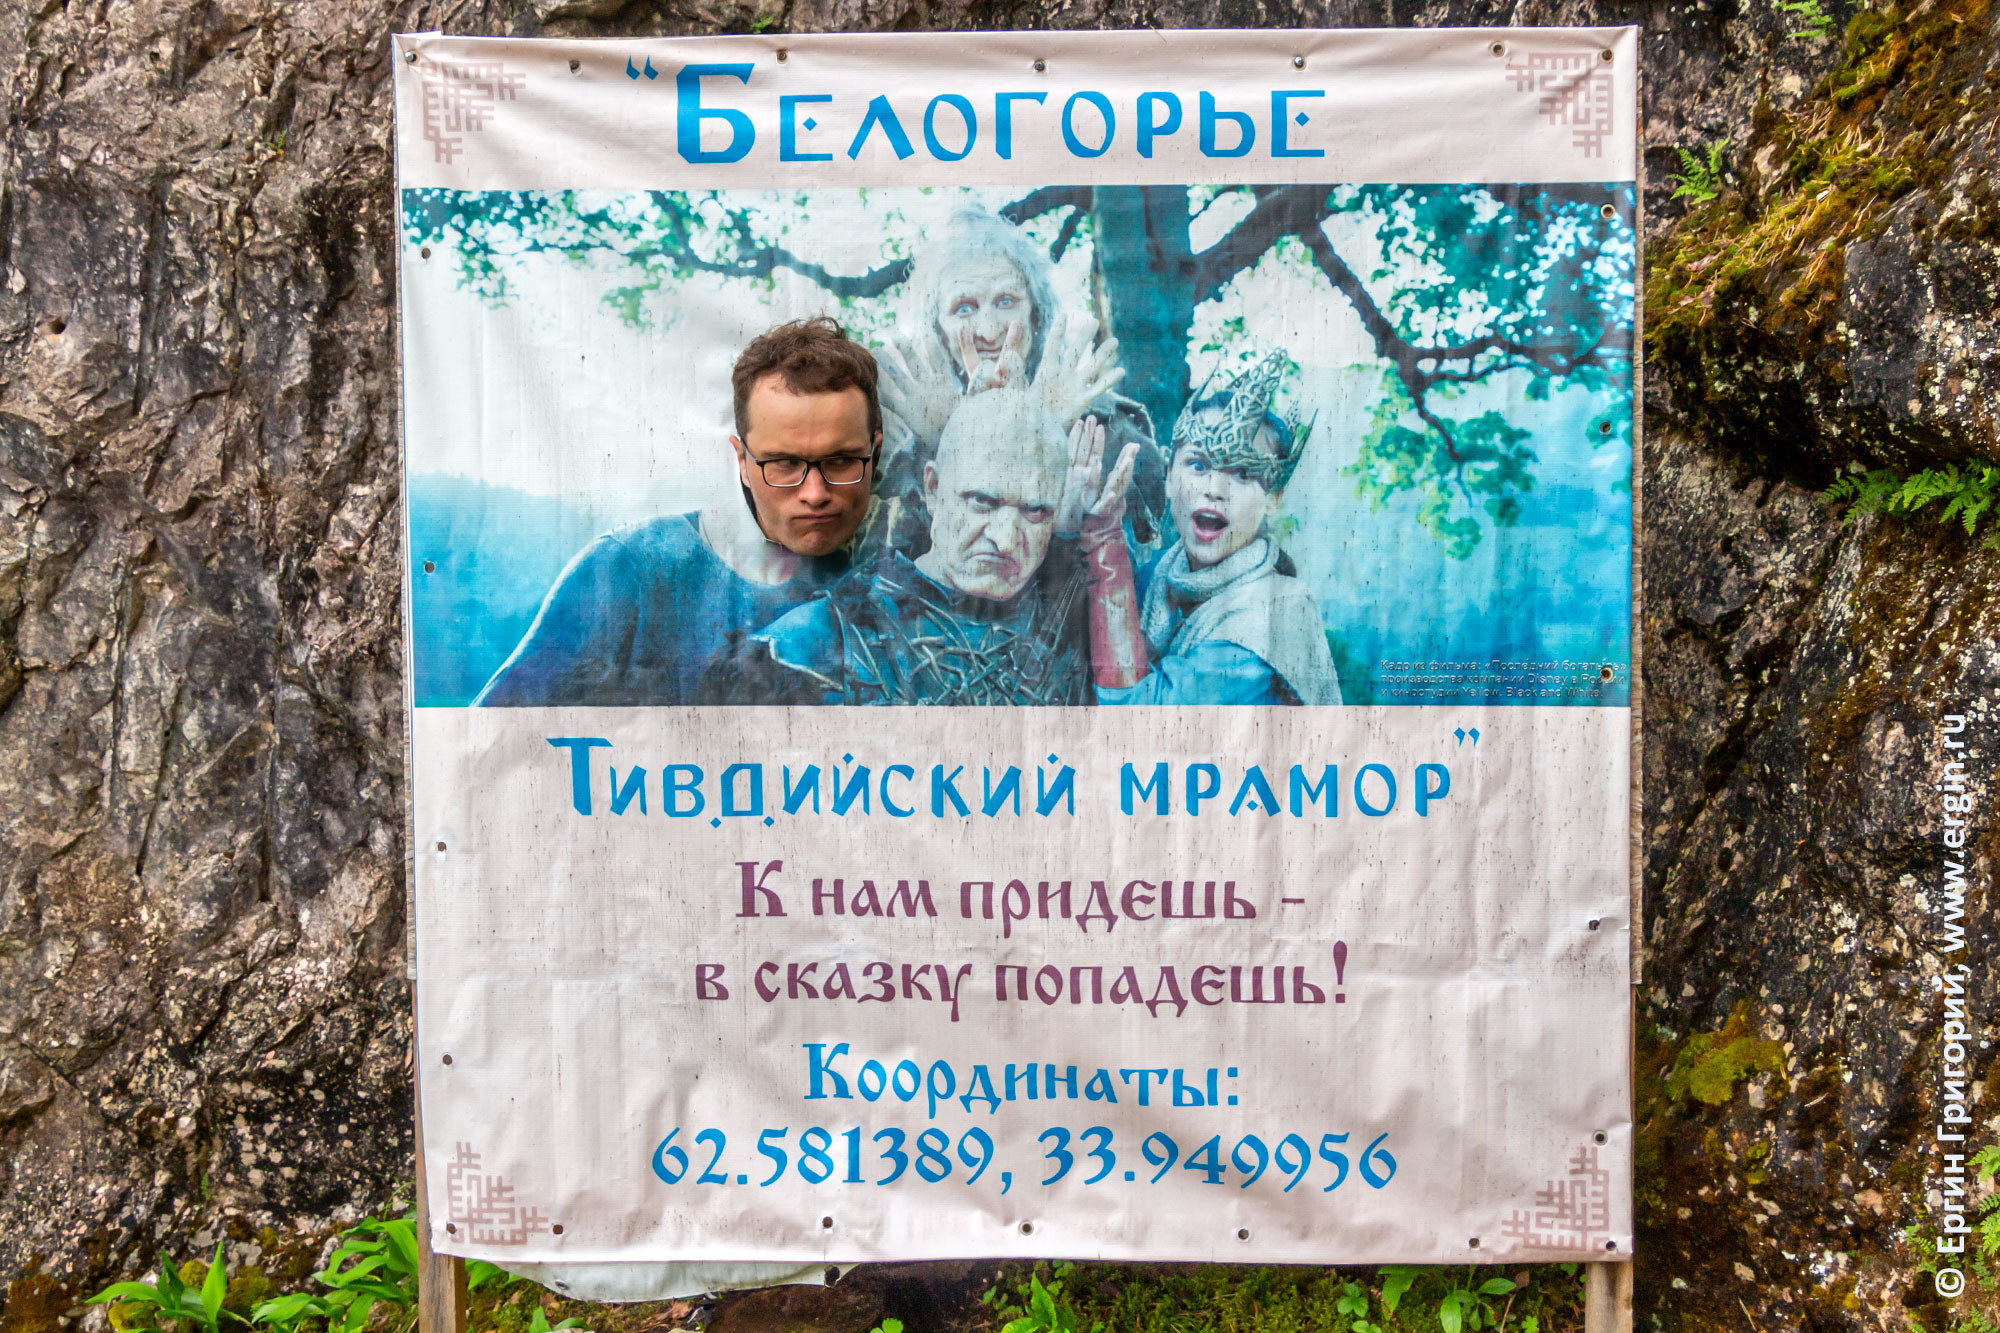 Рекламный баннер "Белогорье. Тивдийский мрамор".